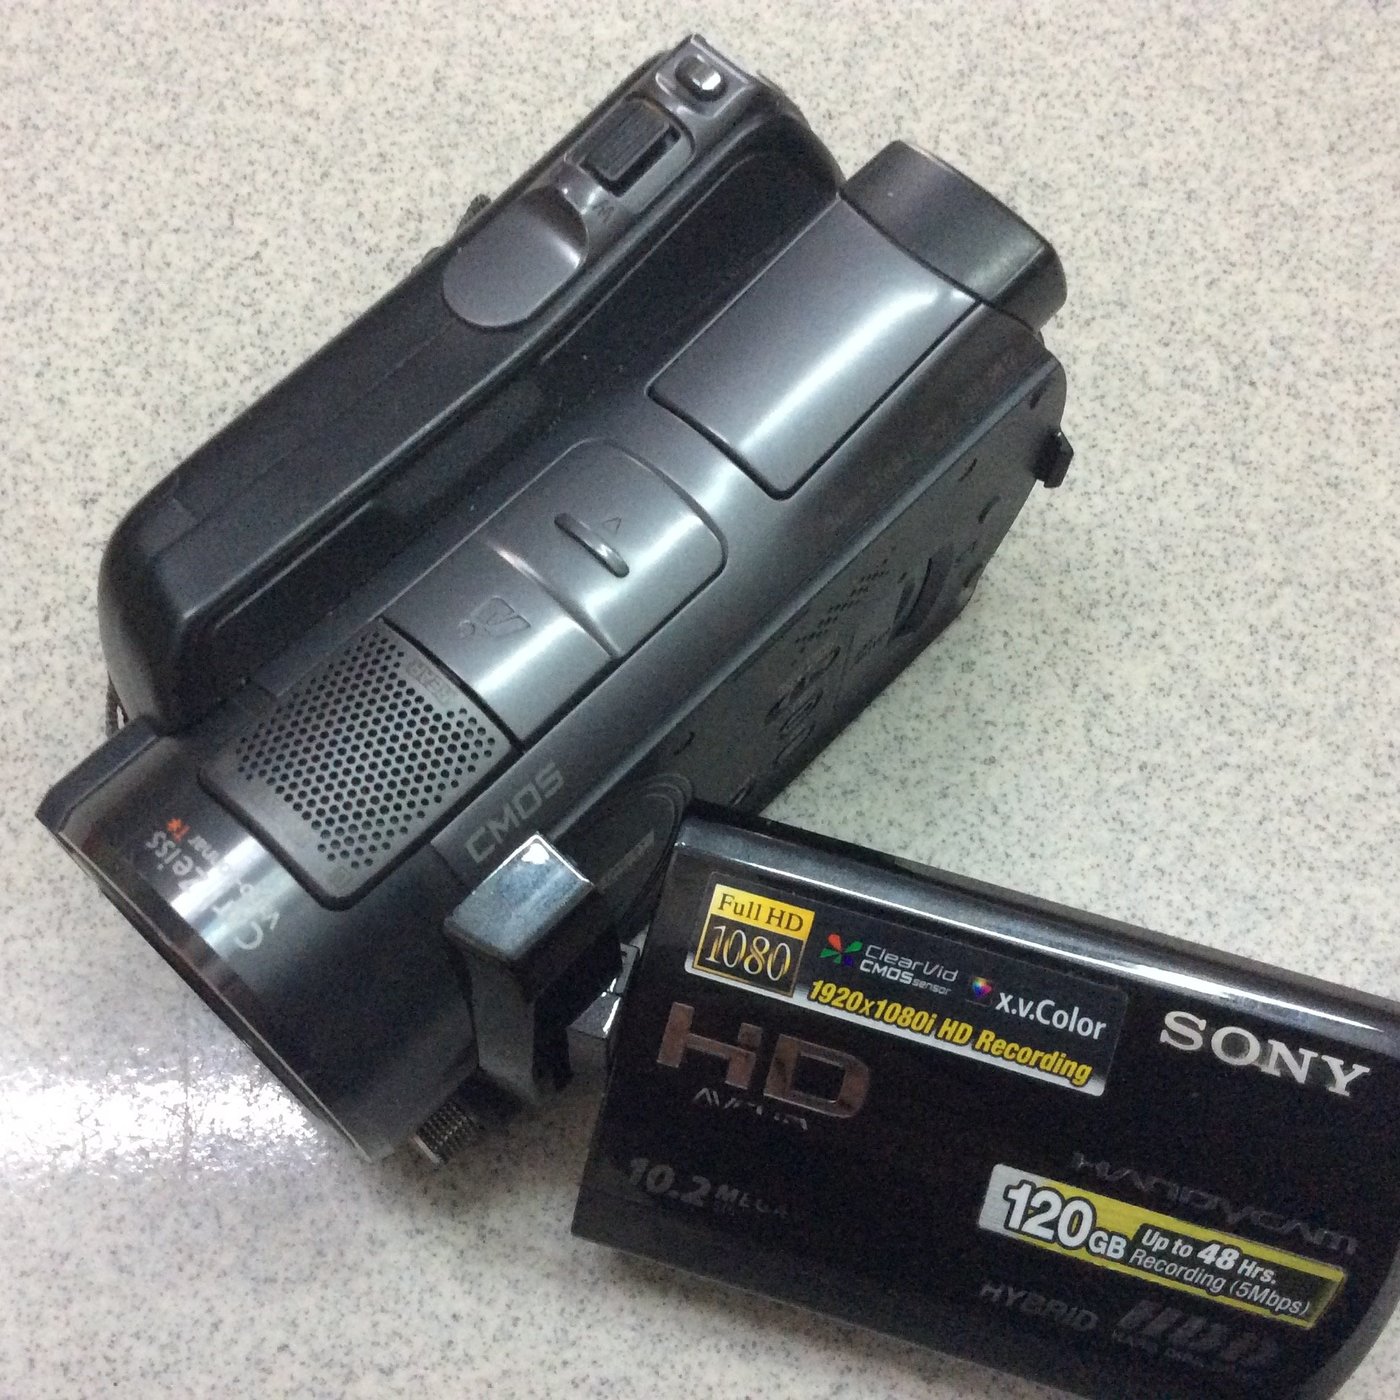 保固一年][高雄明豐] 公司貨SONY HDR-SR12 120GB HD 攝錄機便宜賣sr100